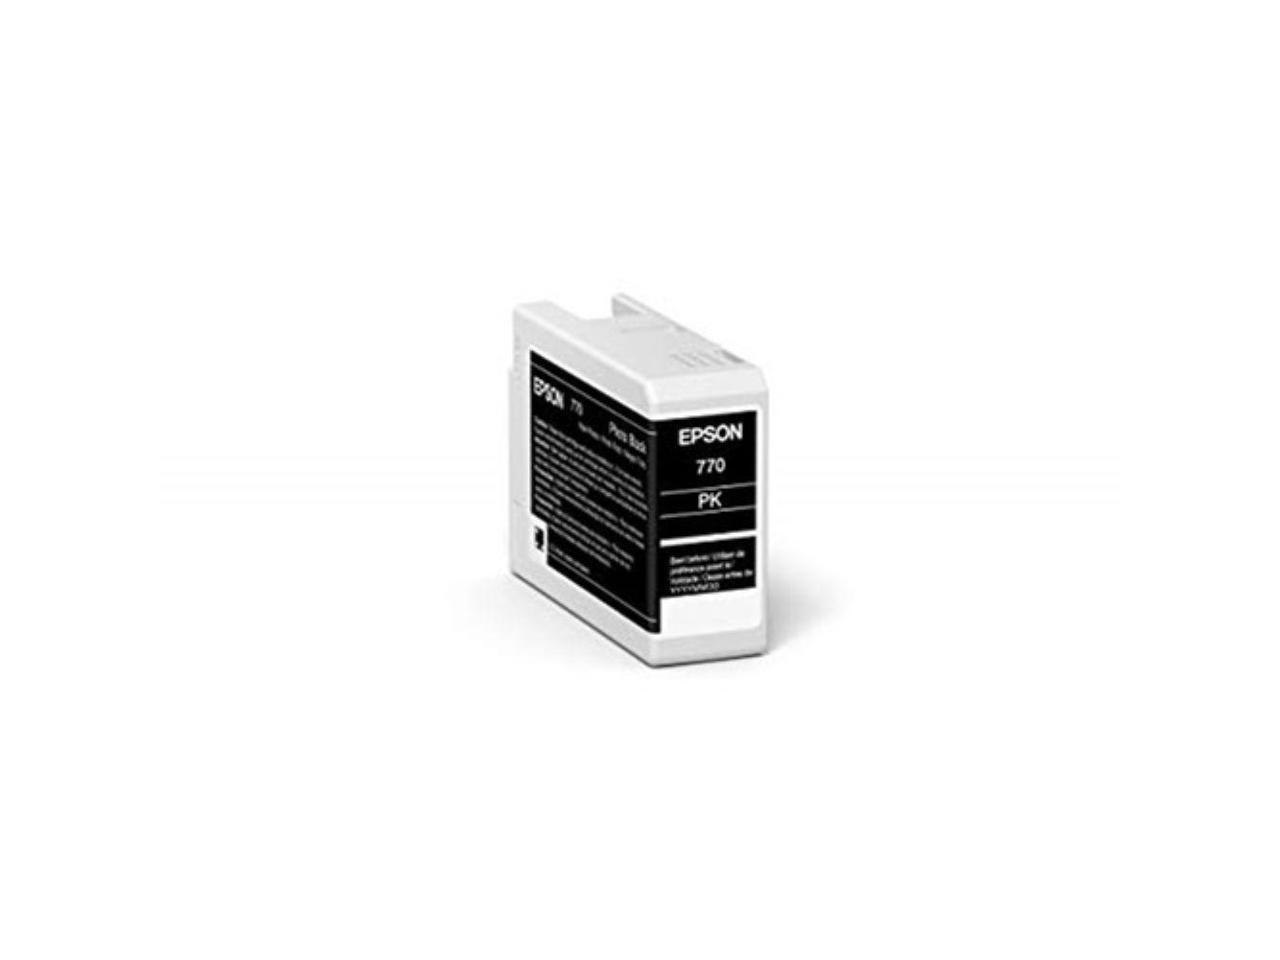 Epson UltraChrome PRO 770 Original Inkjet Ink Cartridge - Photo Black Pack